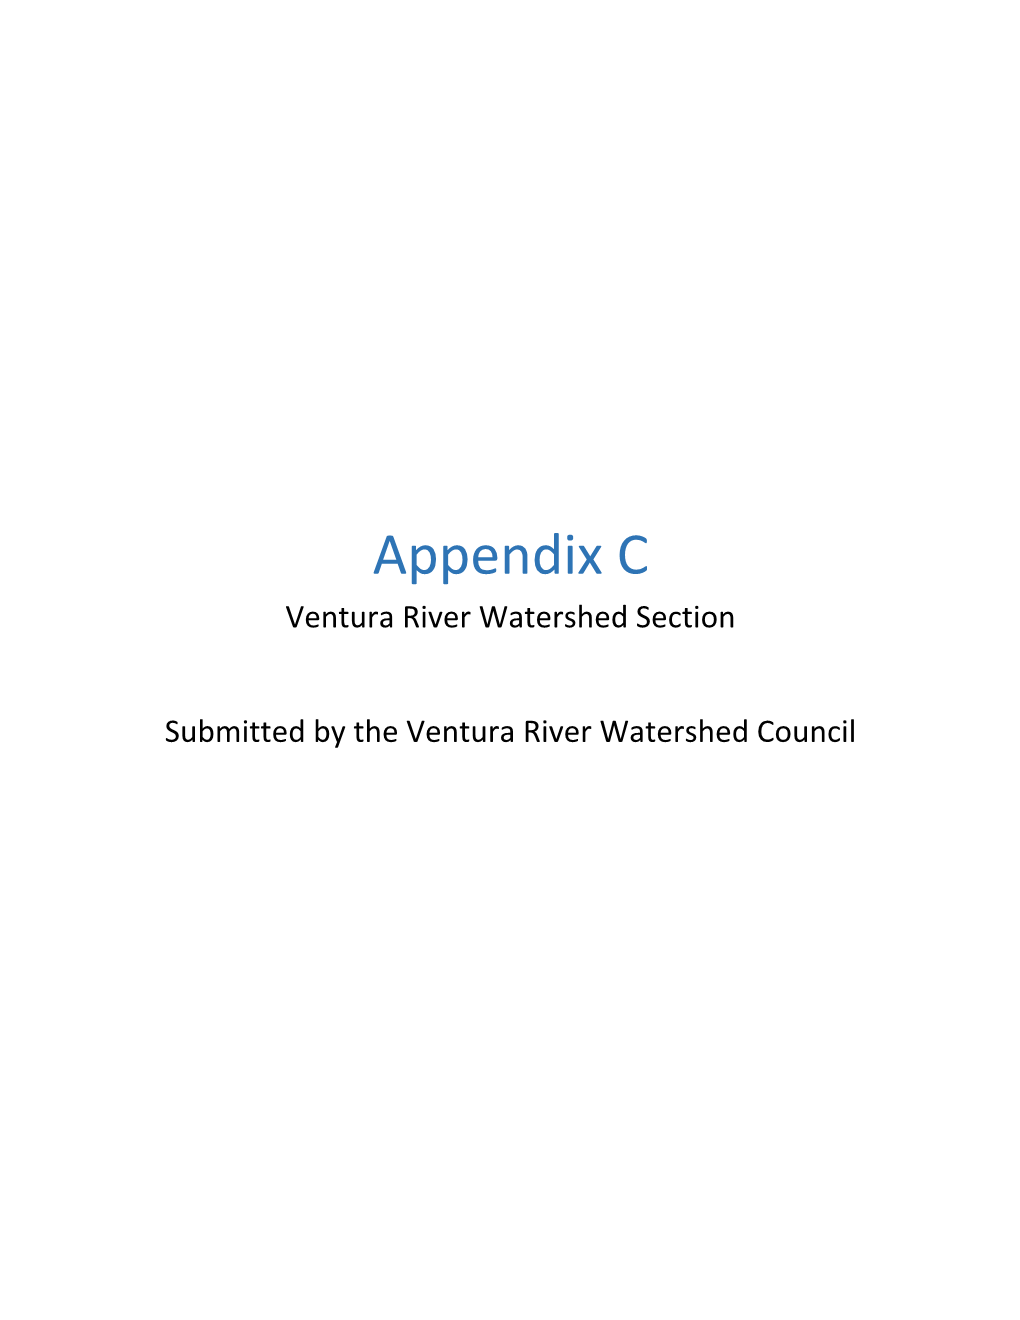 Appendix C Ventura River Watershed Section